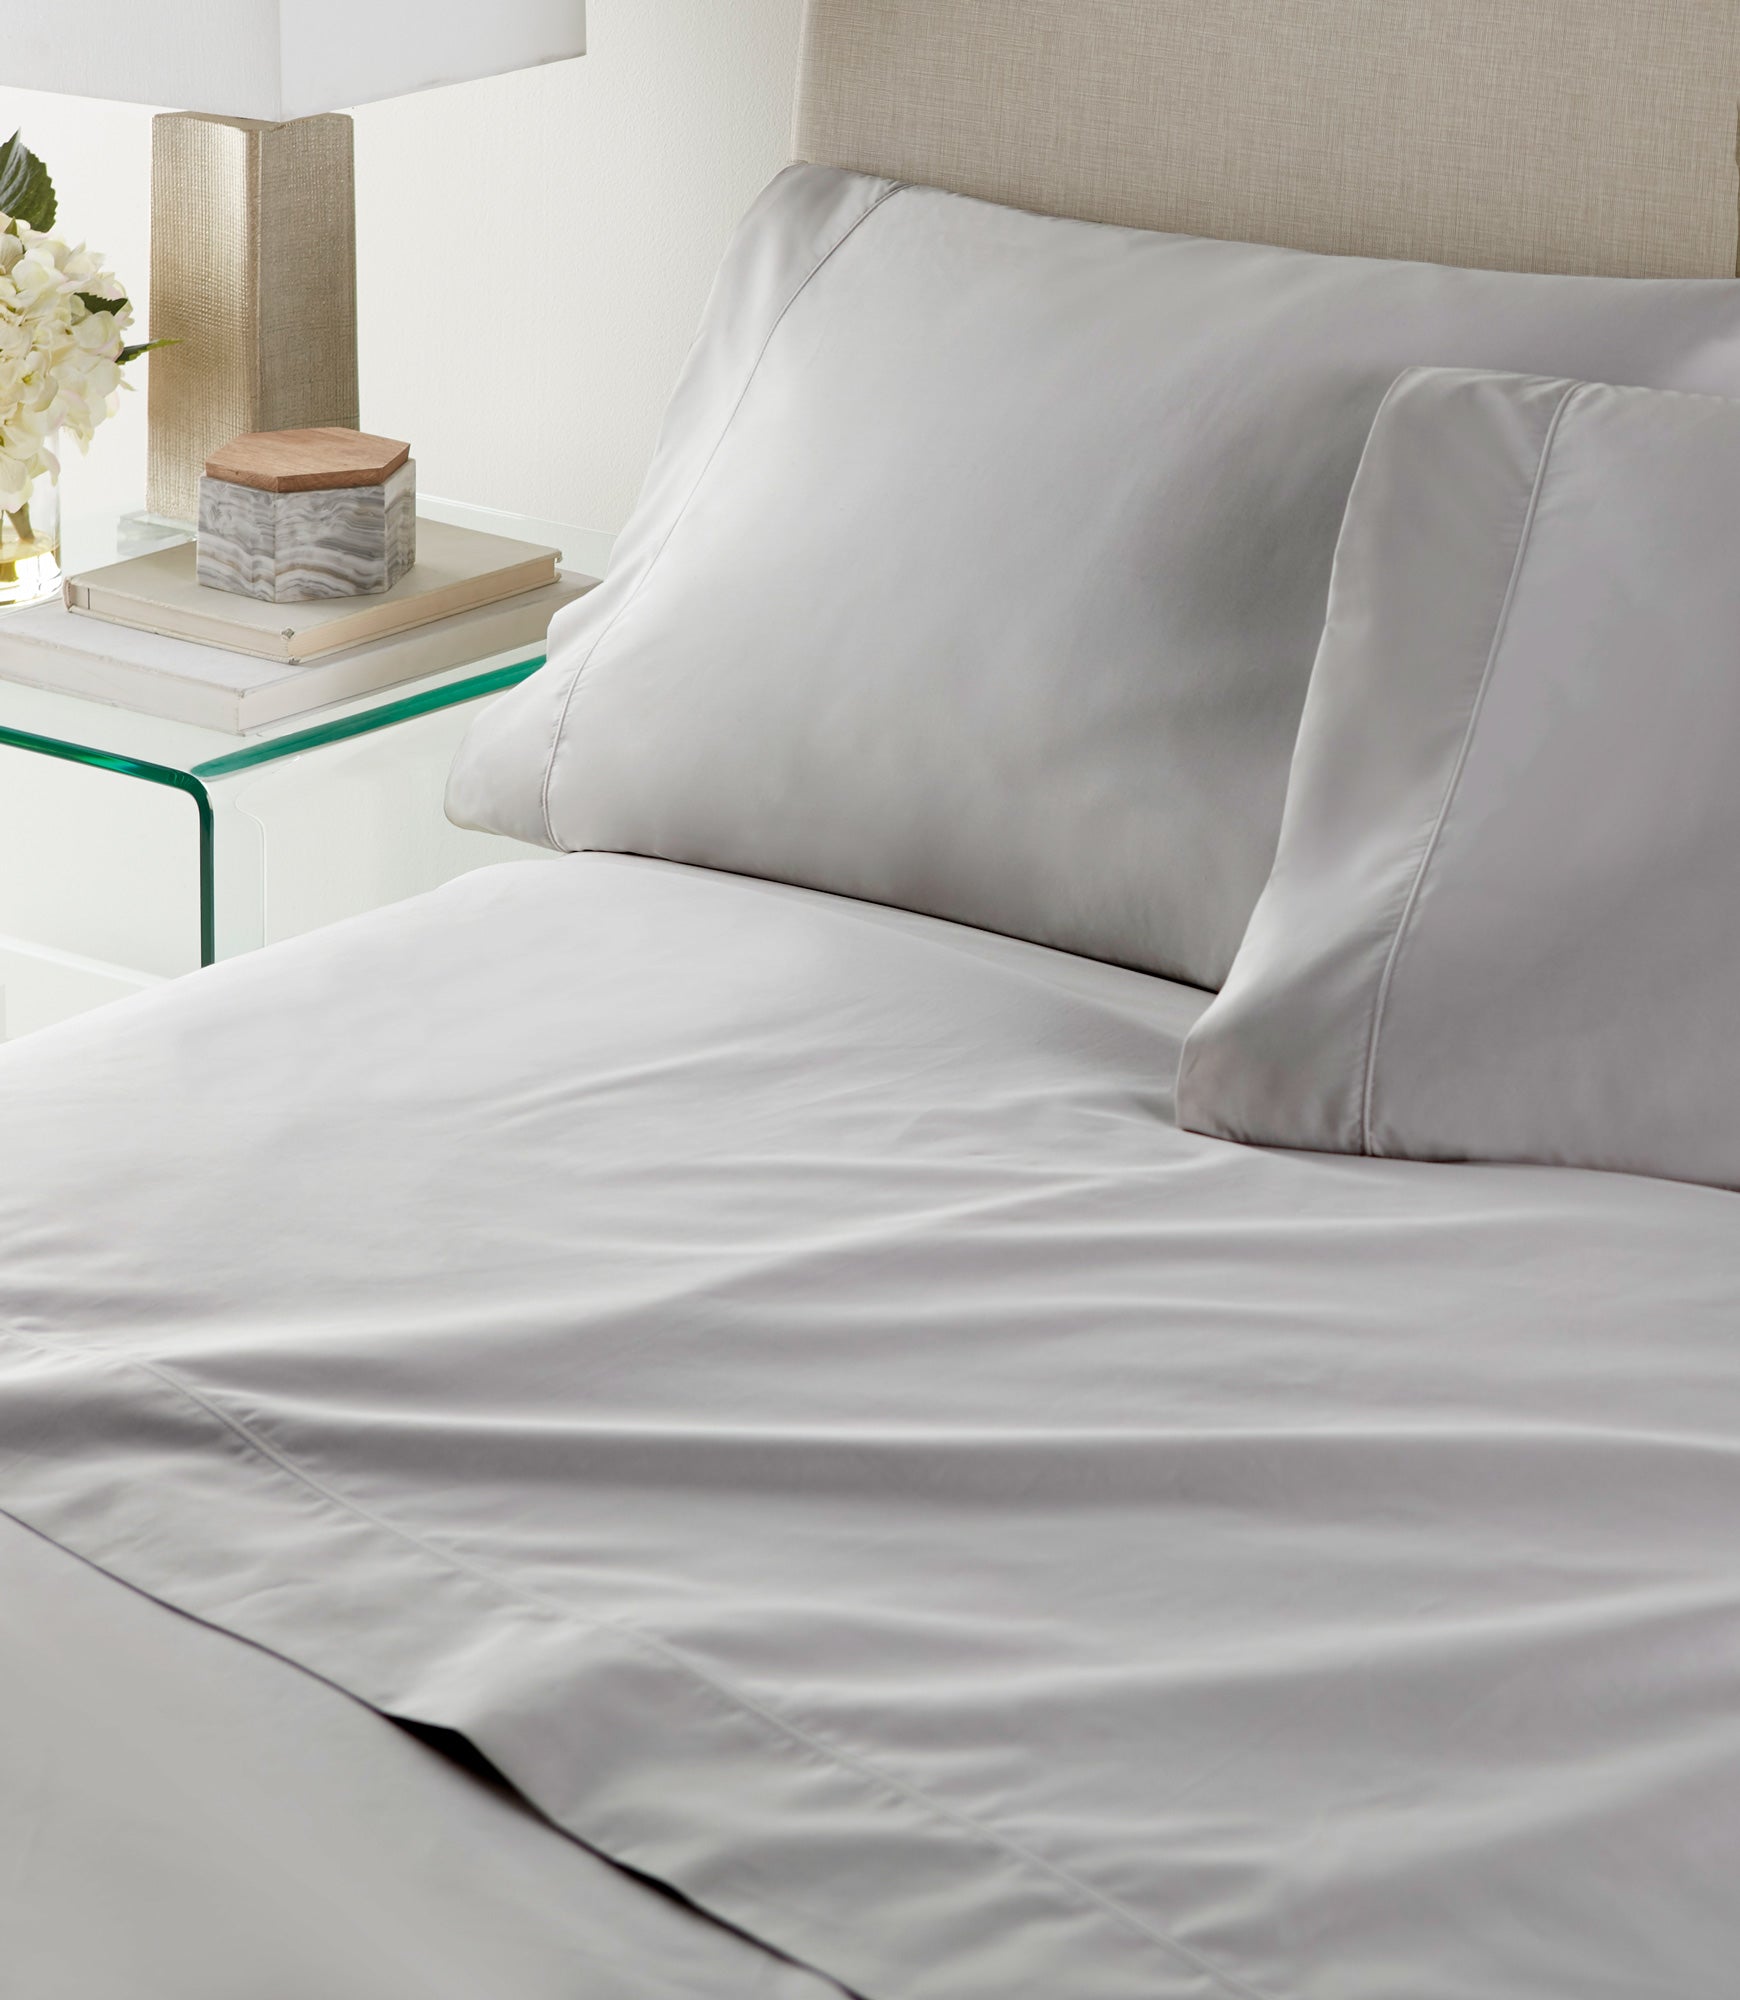 Nile Egyptian Cotton Sheet Set Light Gray on Bed